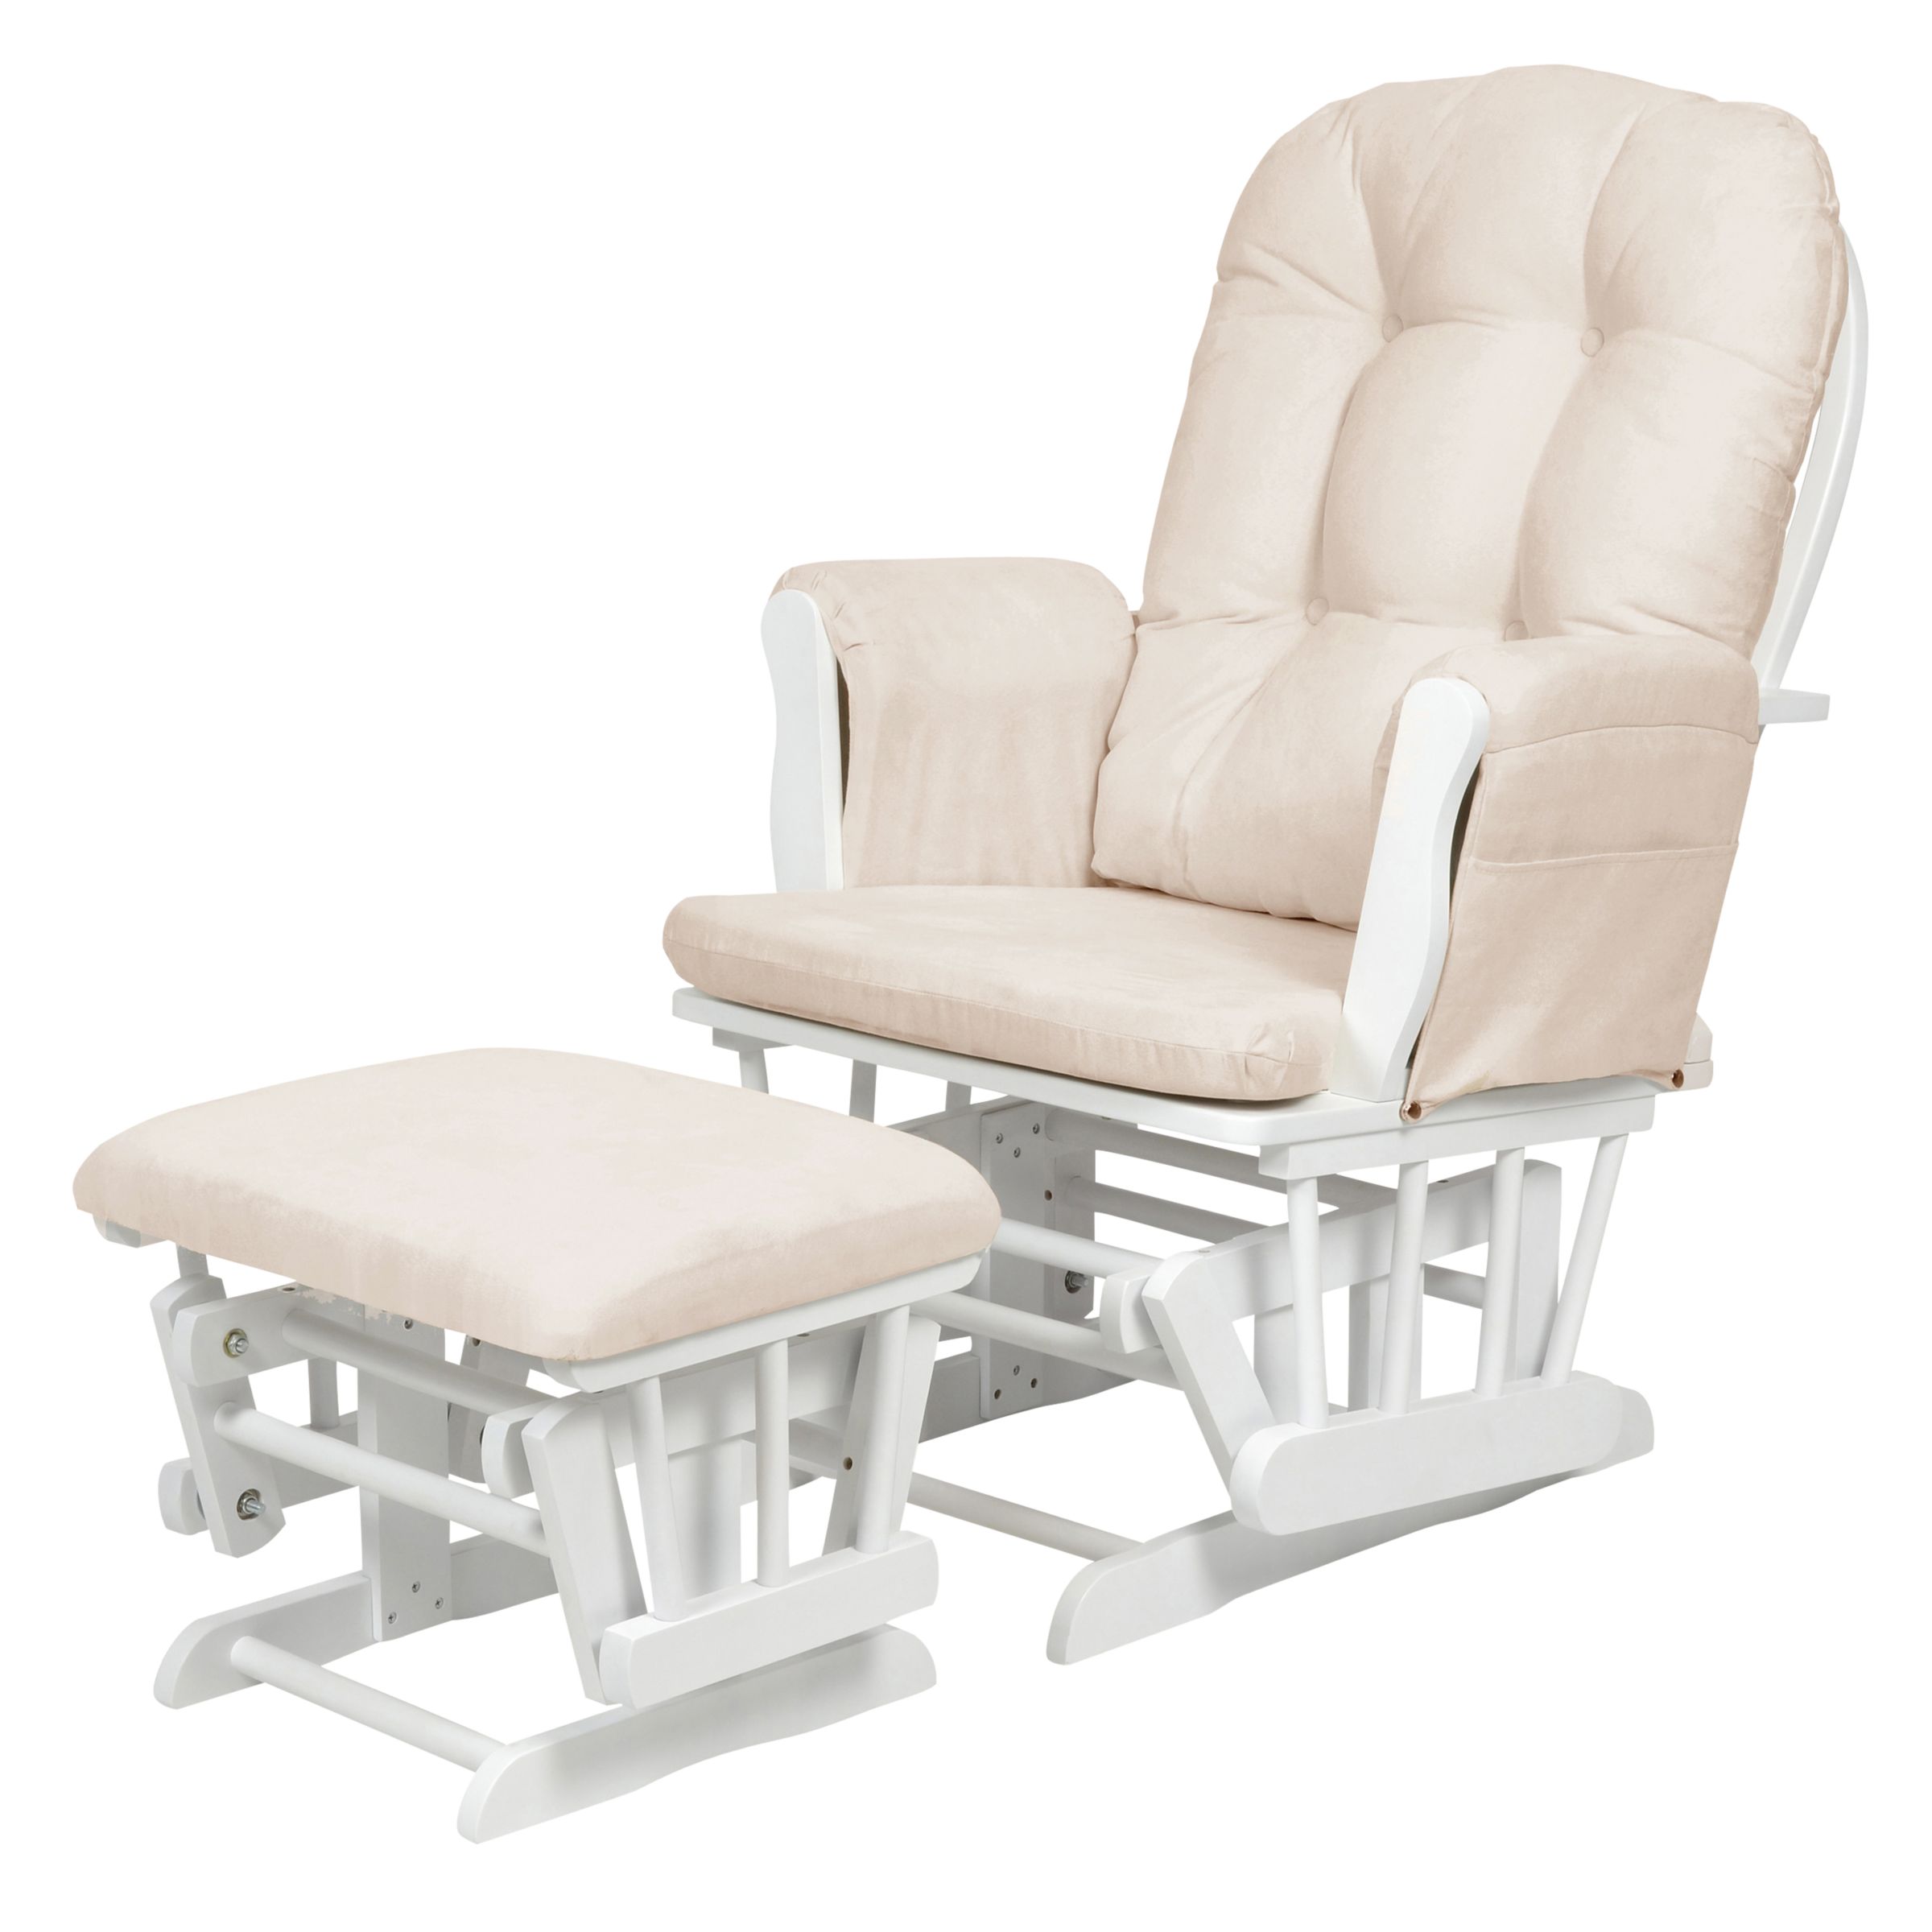 nursery chair and footstool